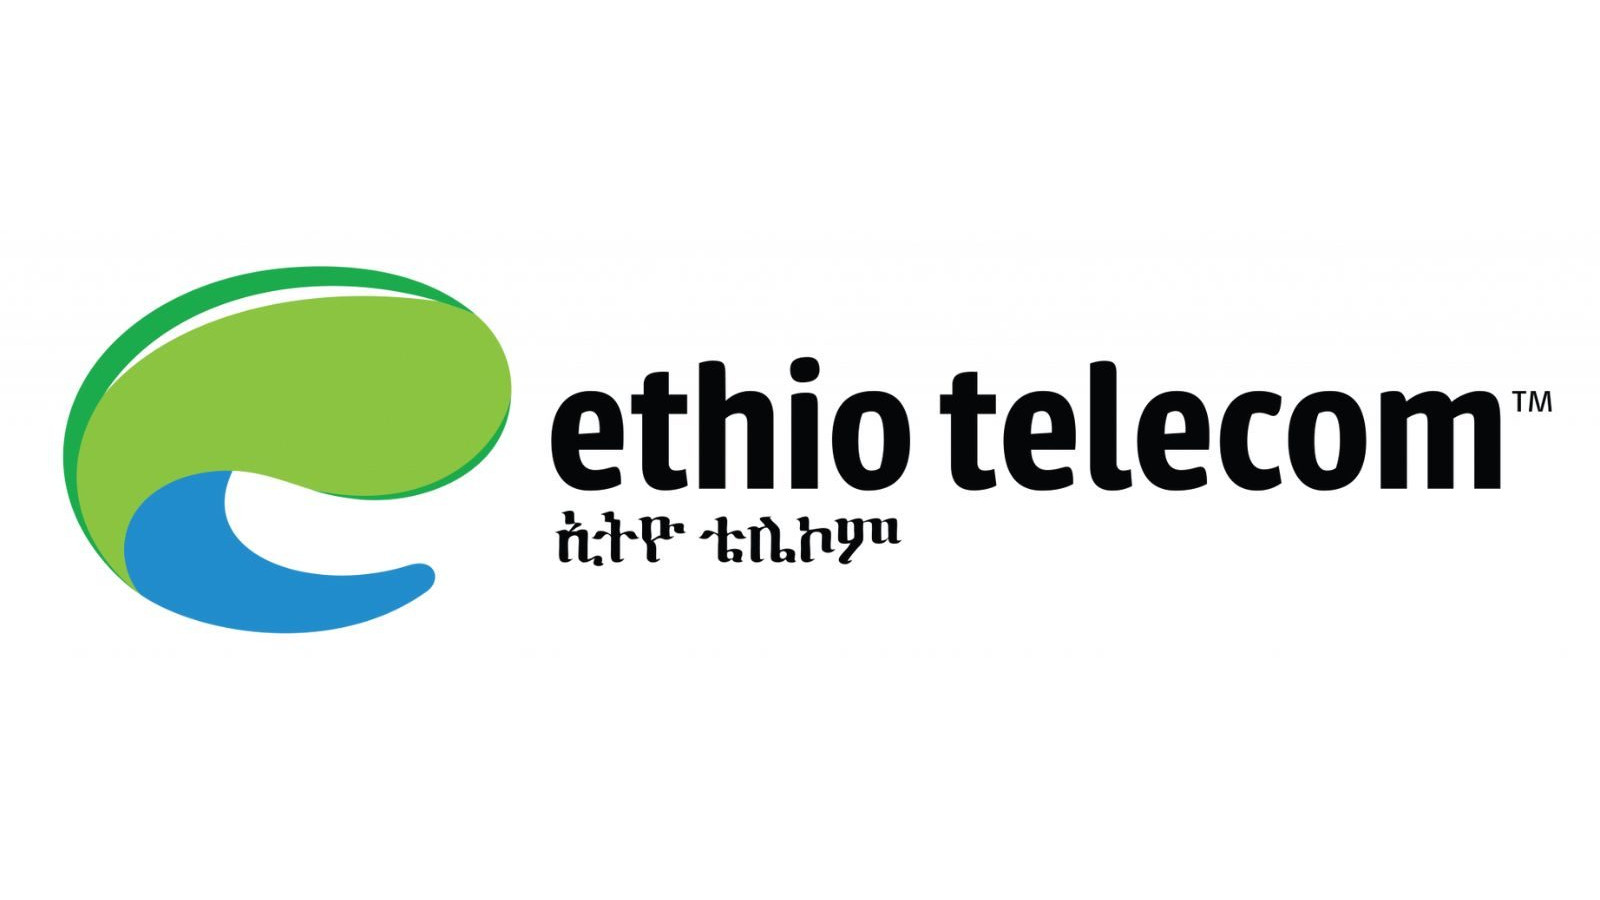 Ethiotelecom 5 ETB Mobile Top-up ET (0.68$)